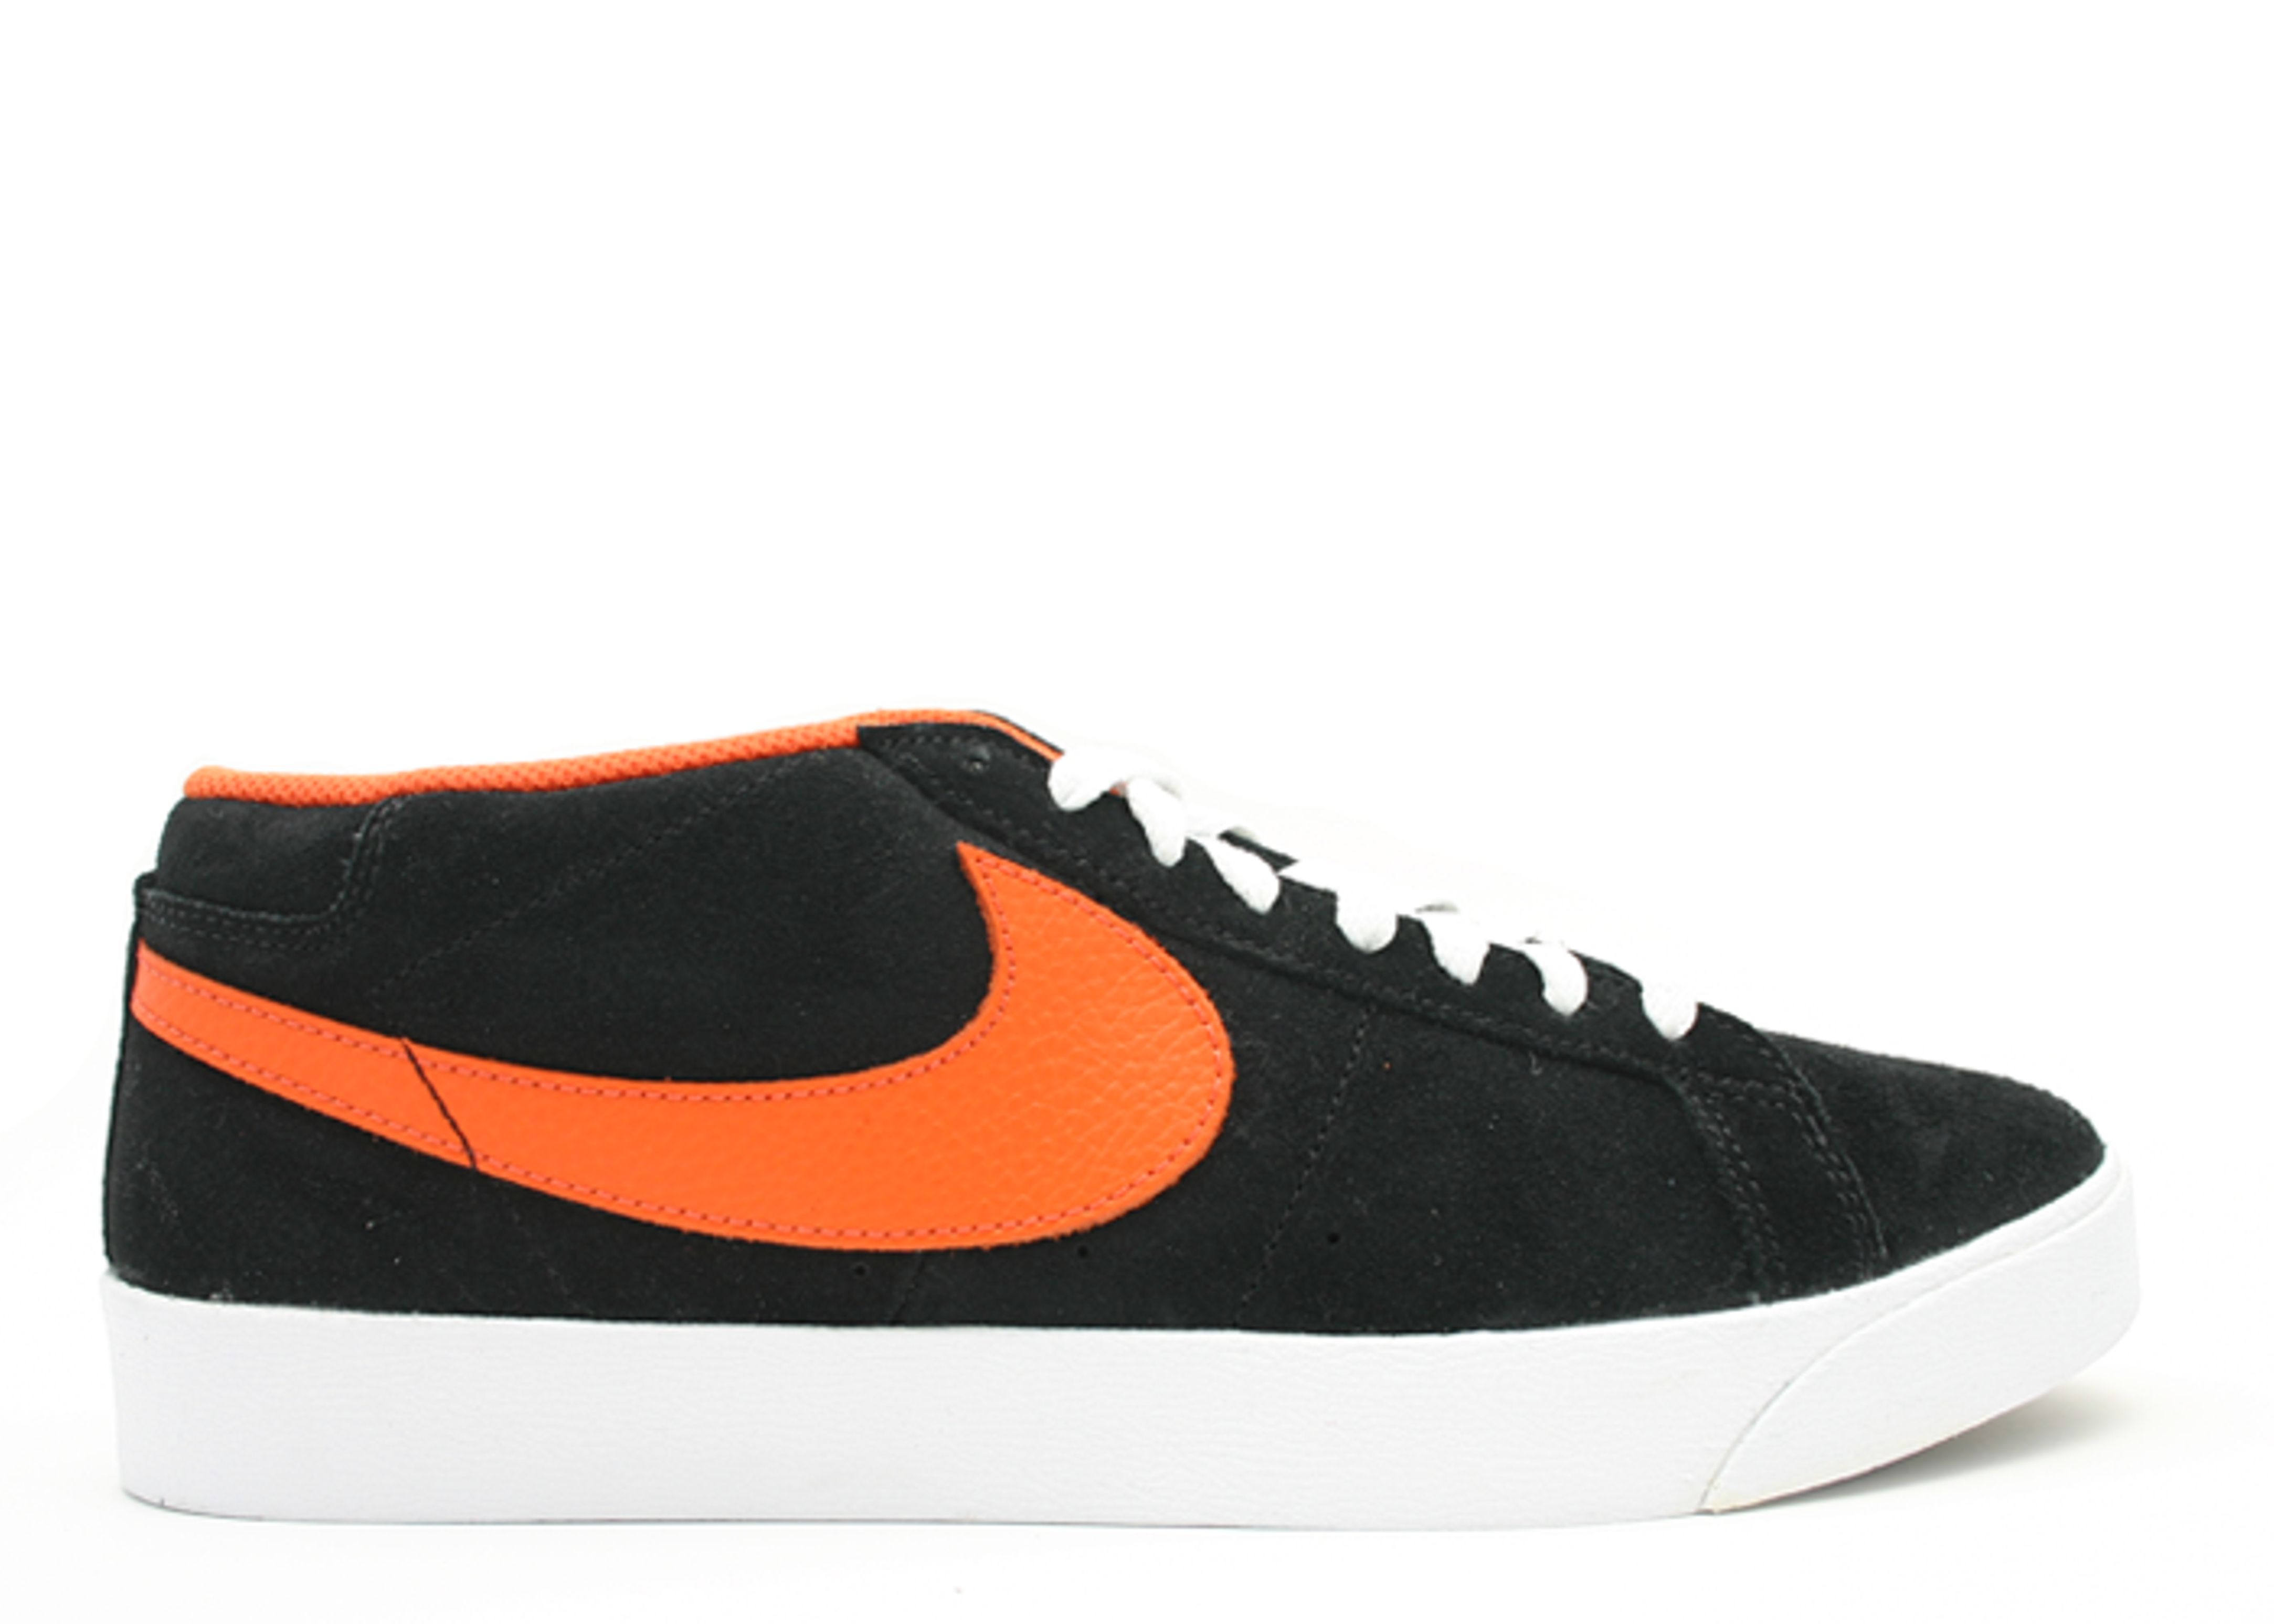 Blazer Sb Cs 'Brian Anderson' - Nike - 395771 001 - black/orange 